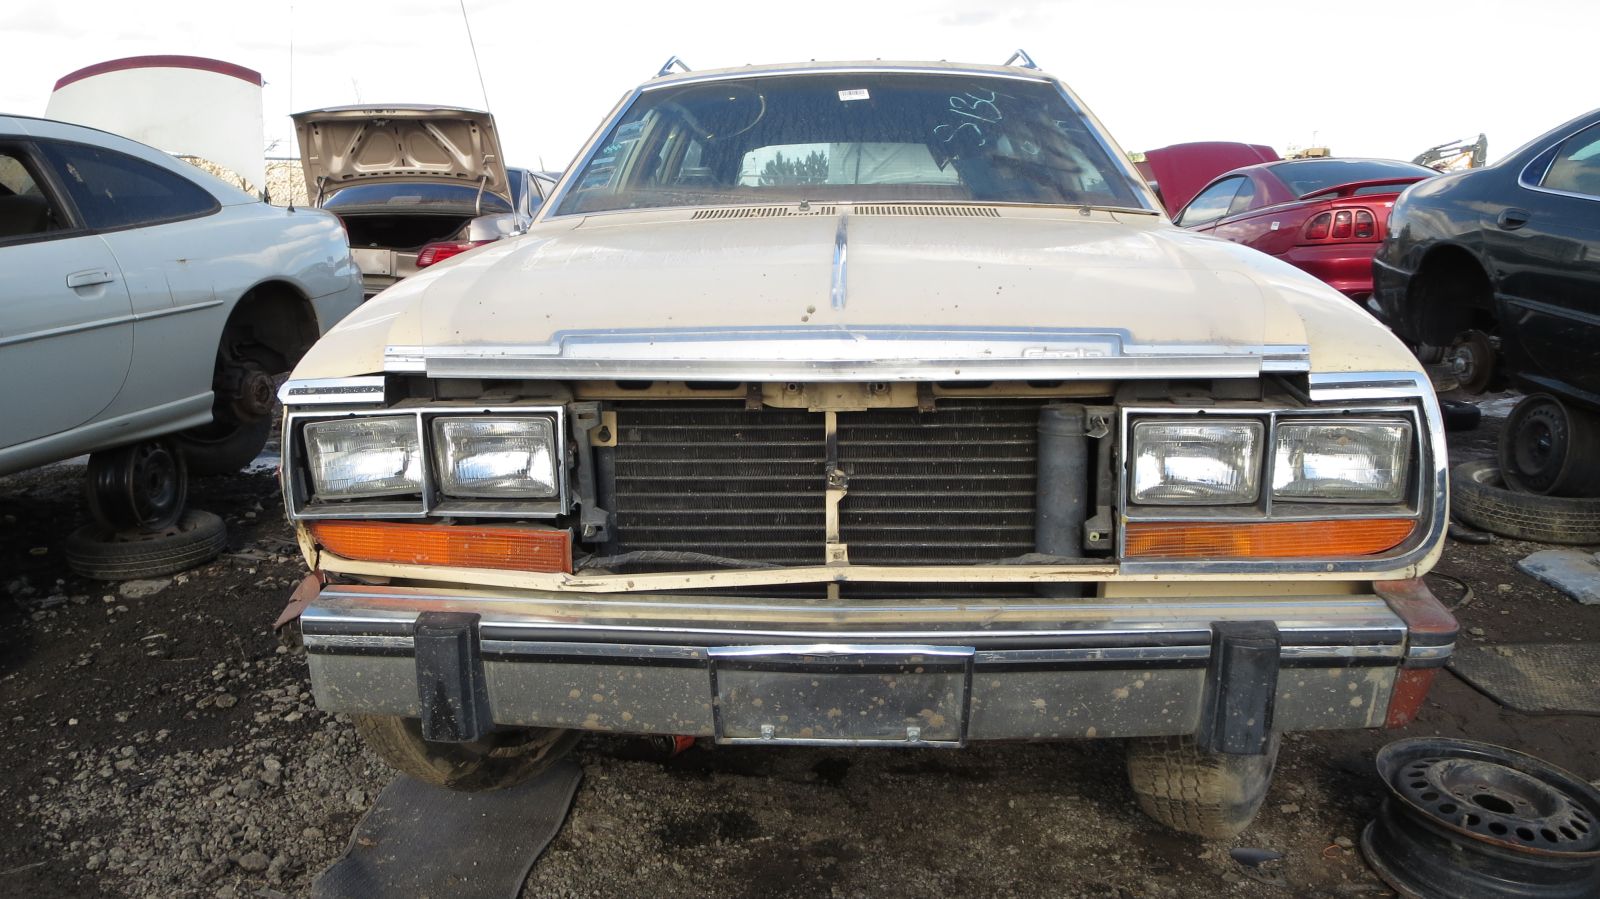 19 - 1982 AMC Eagle wagon in Colorado junkyard - photo by Murilee Martin